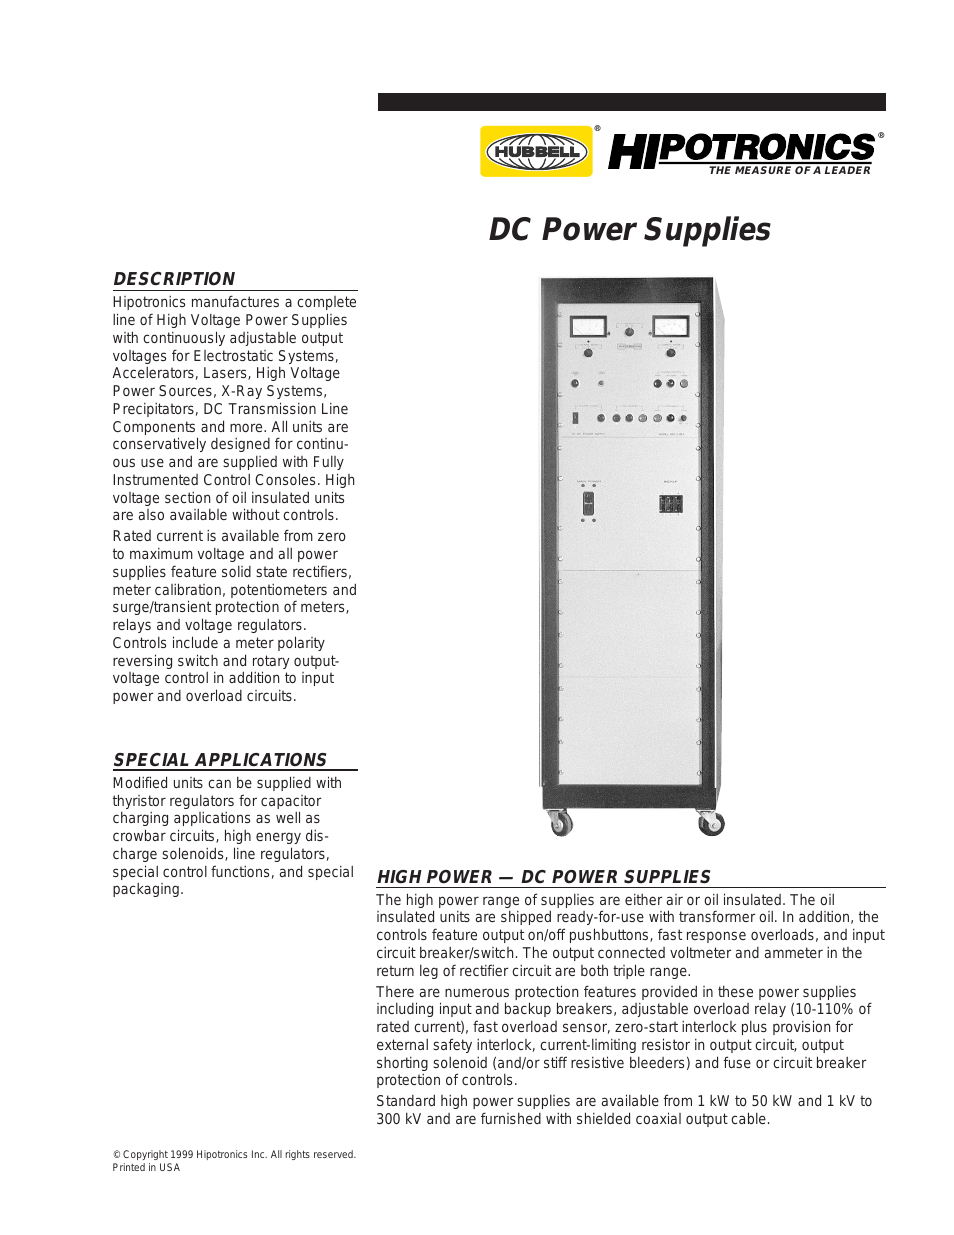 Hipotronics-850-20